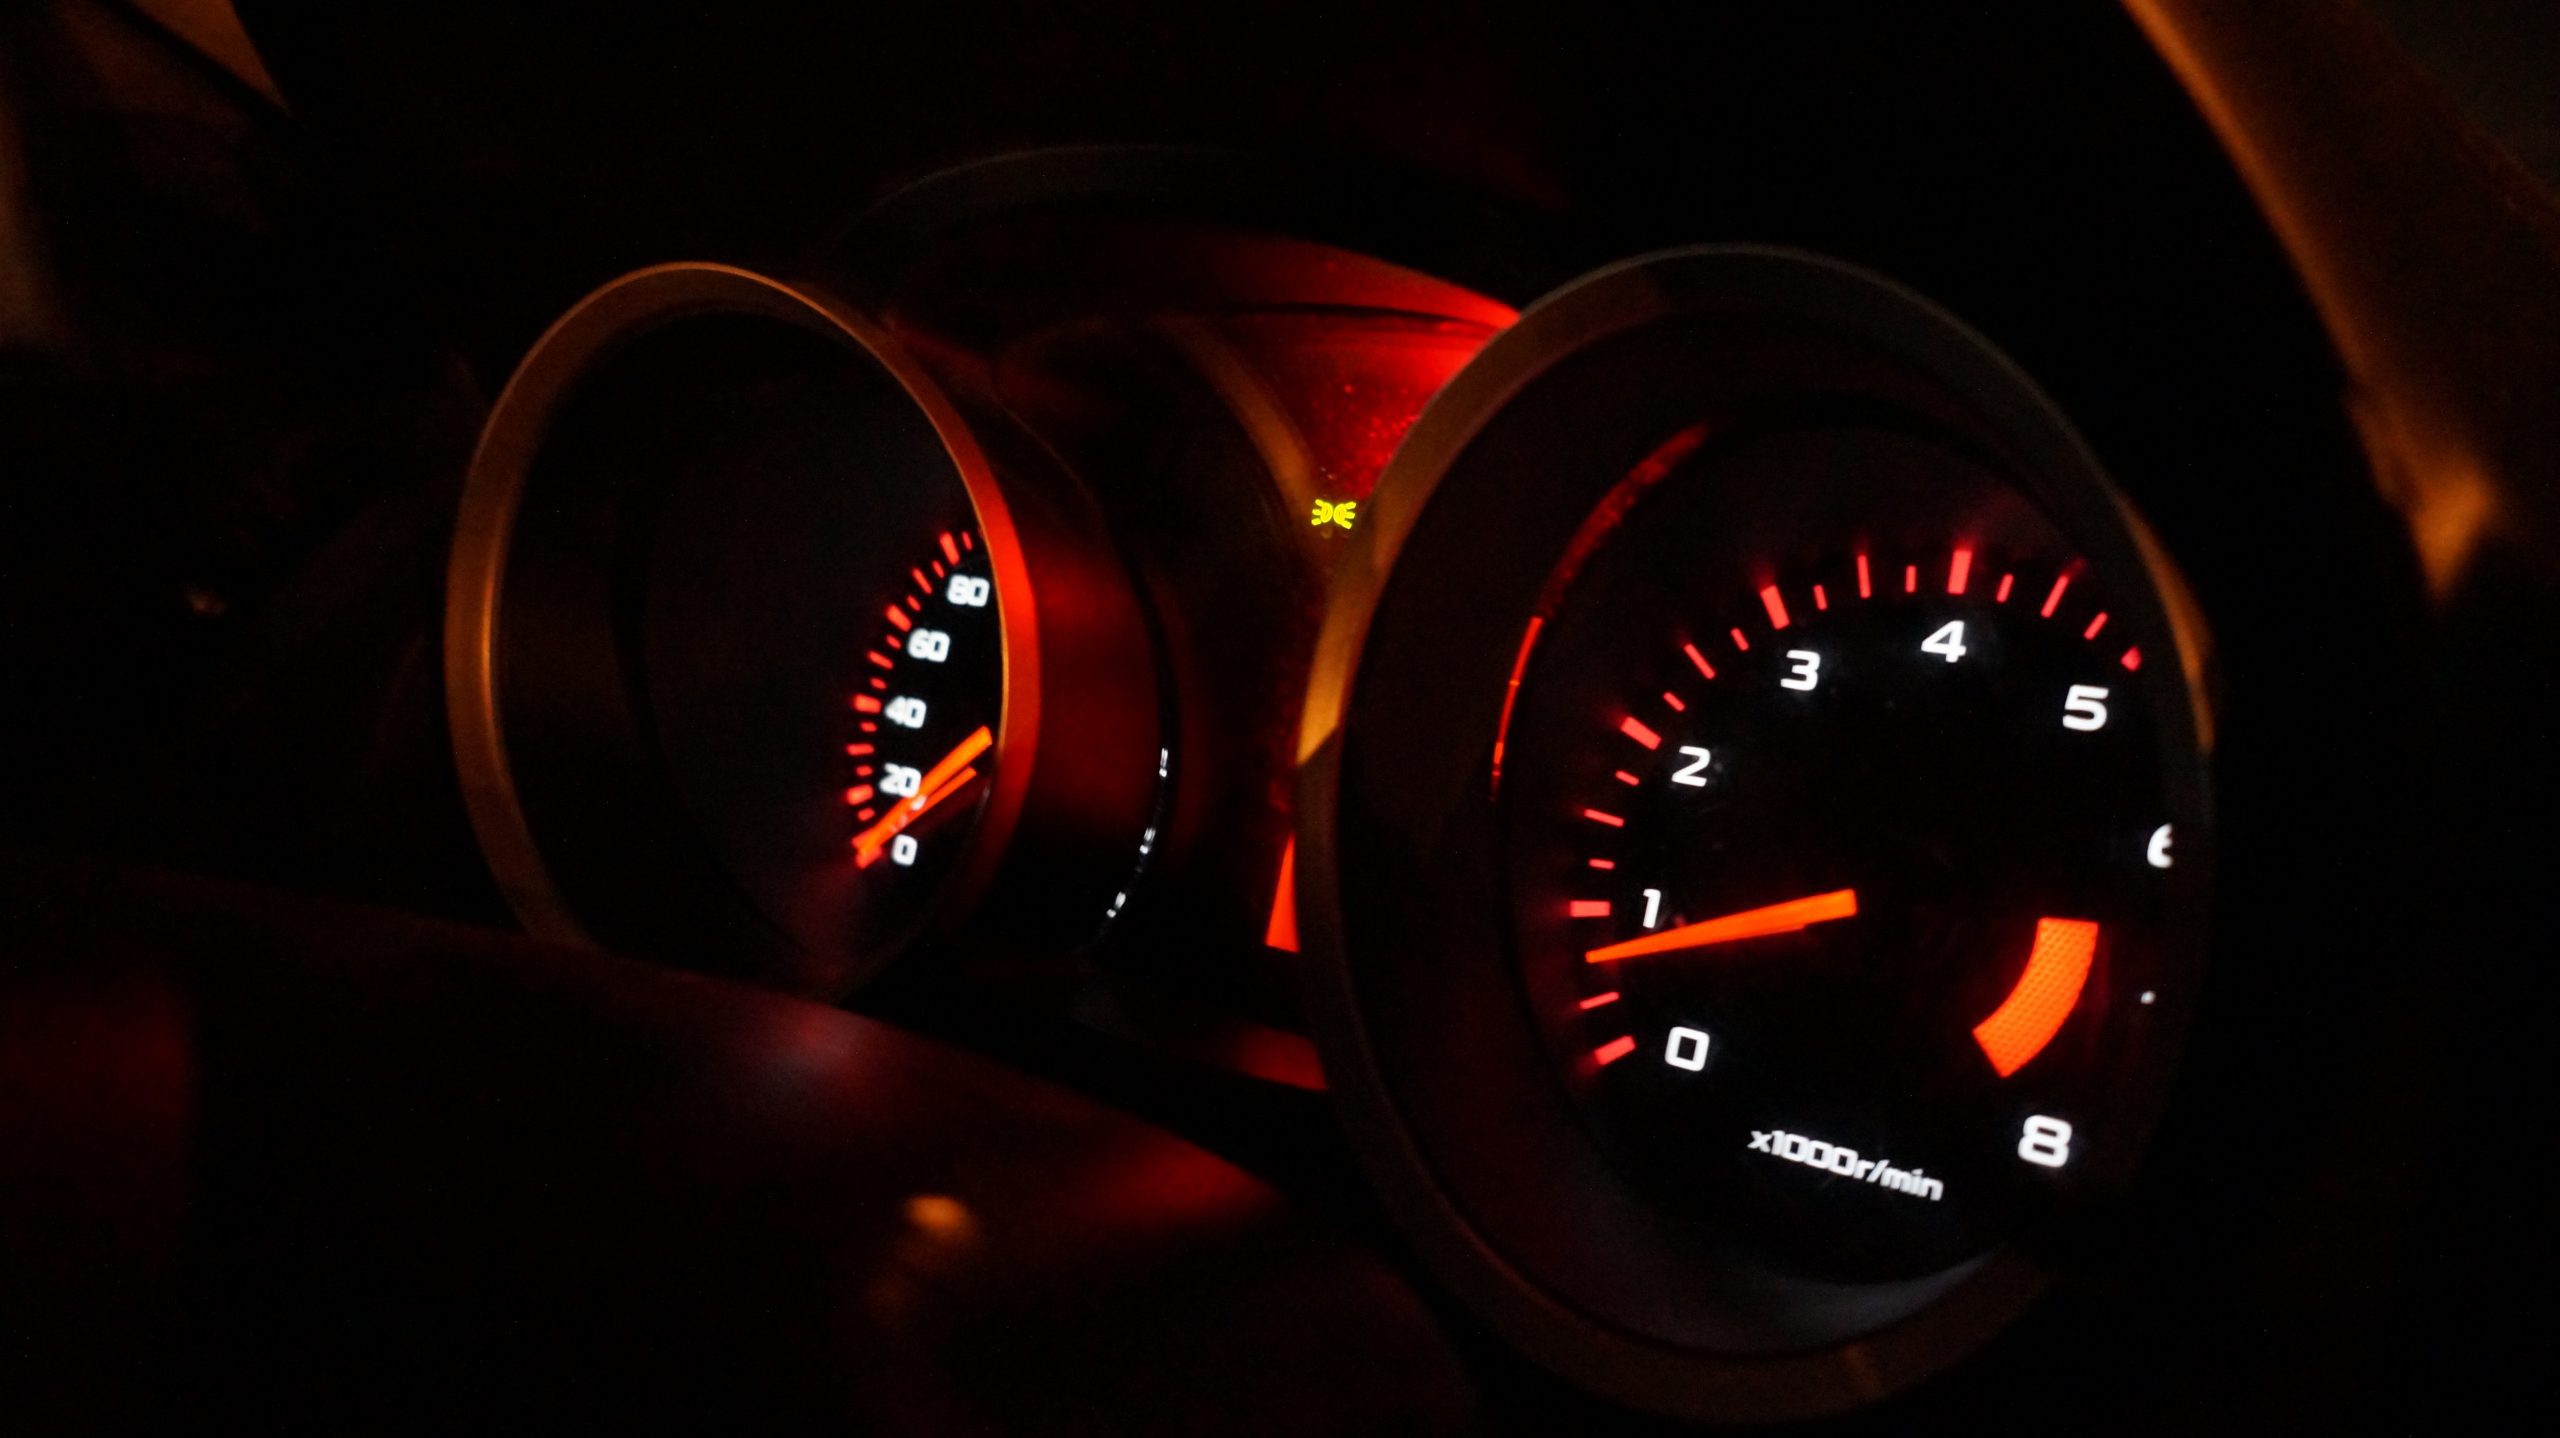 odometer lit up with orange lights at night